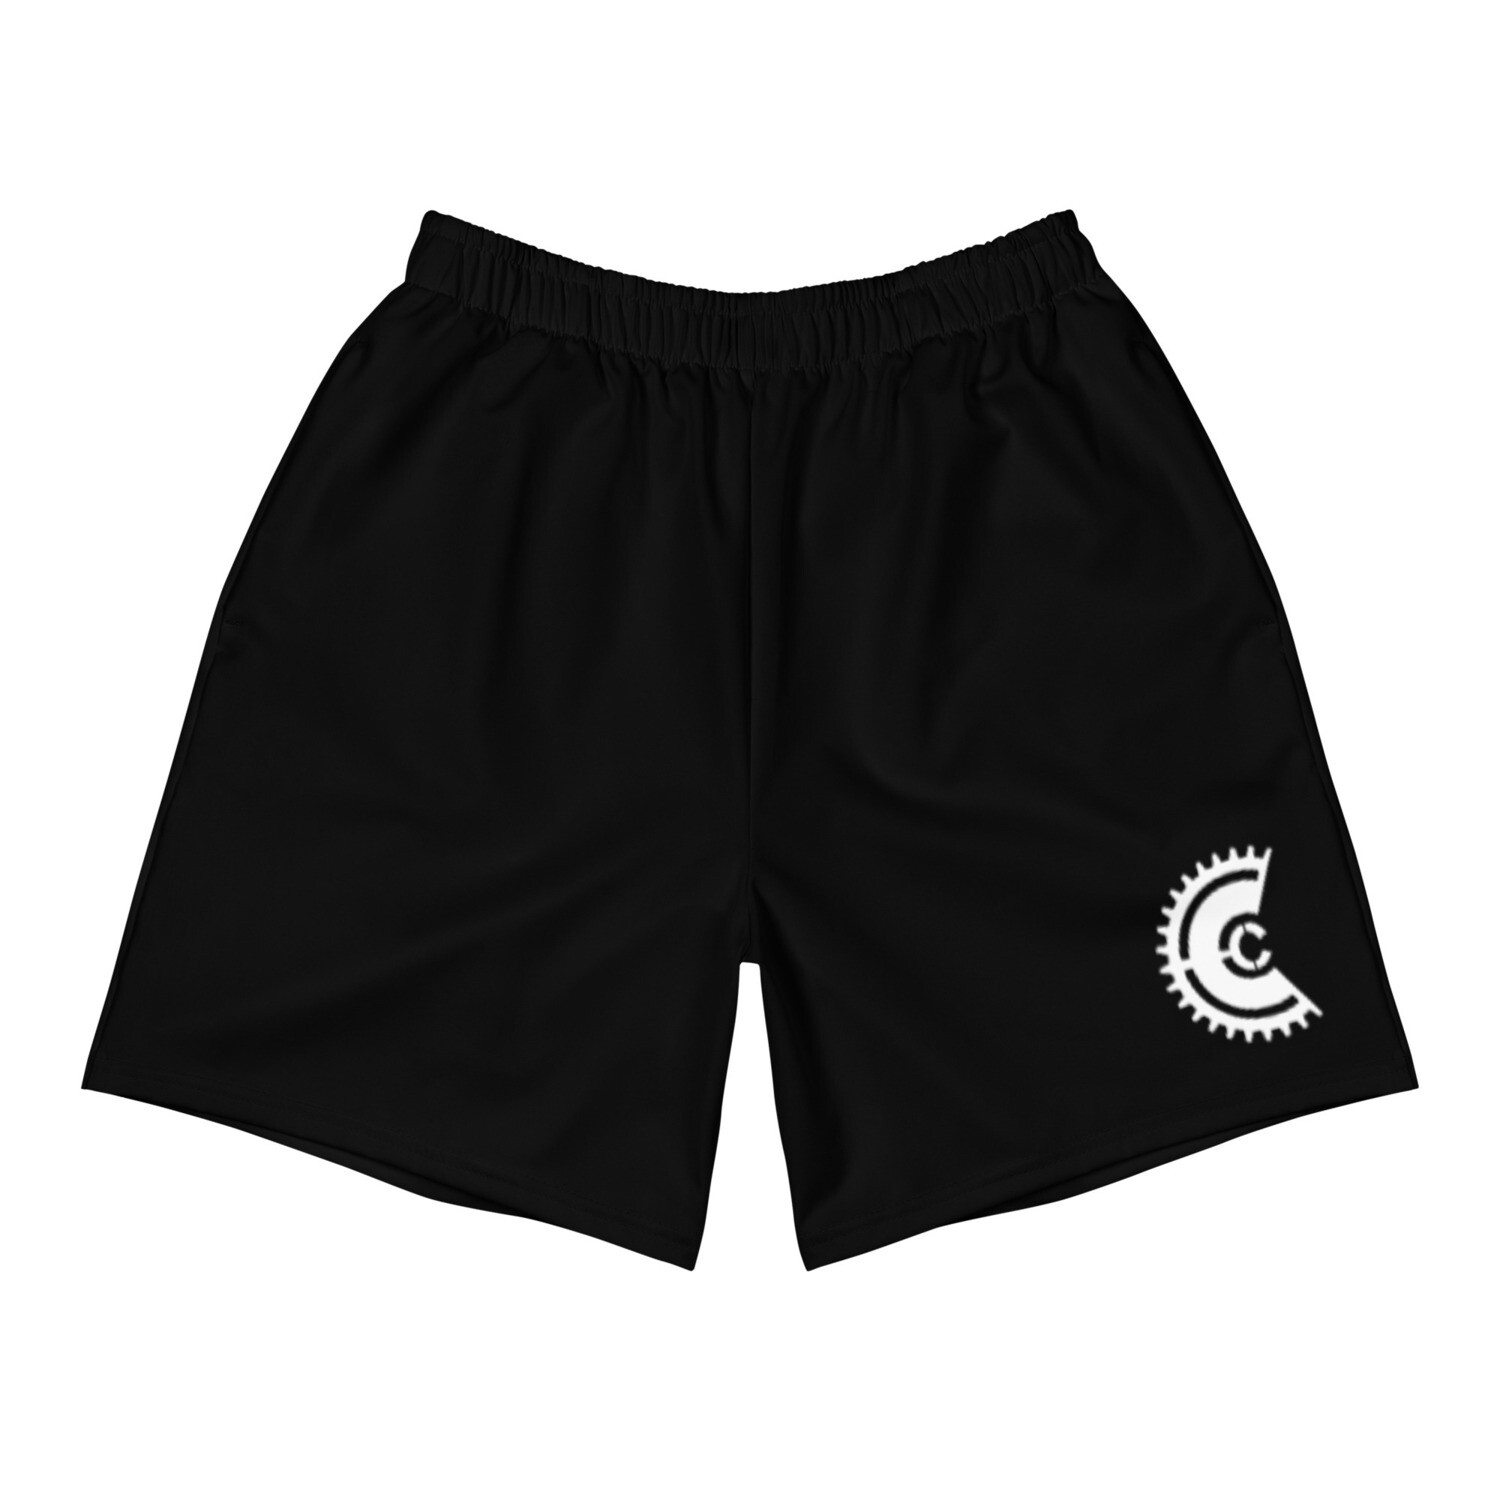 Men's Clockwork Athletic Shorts